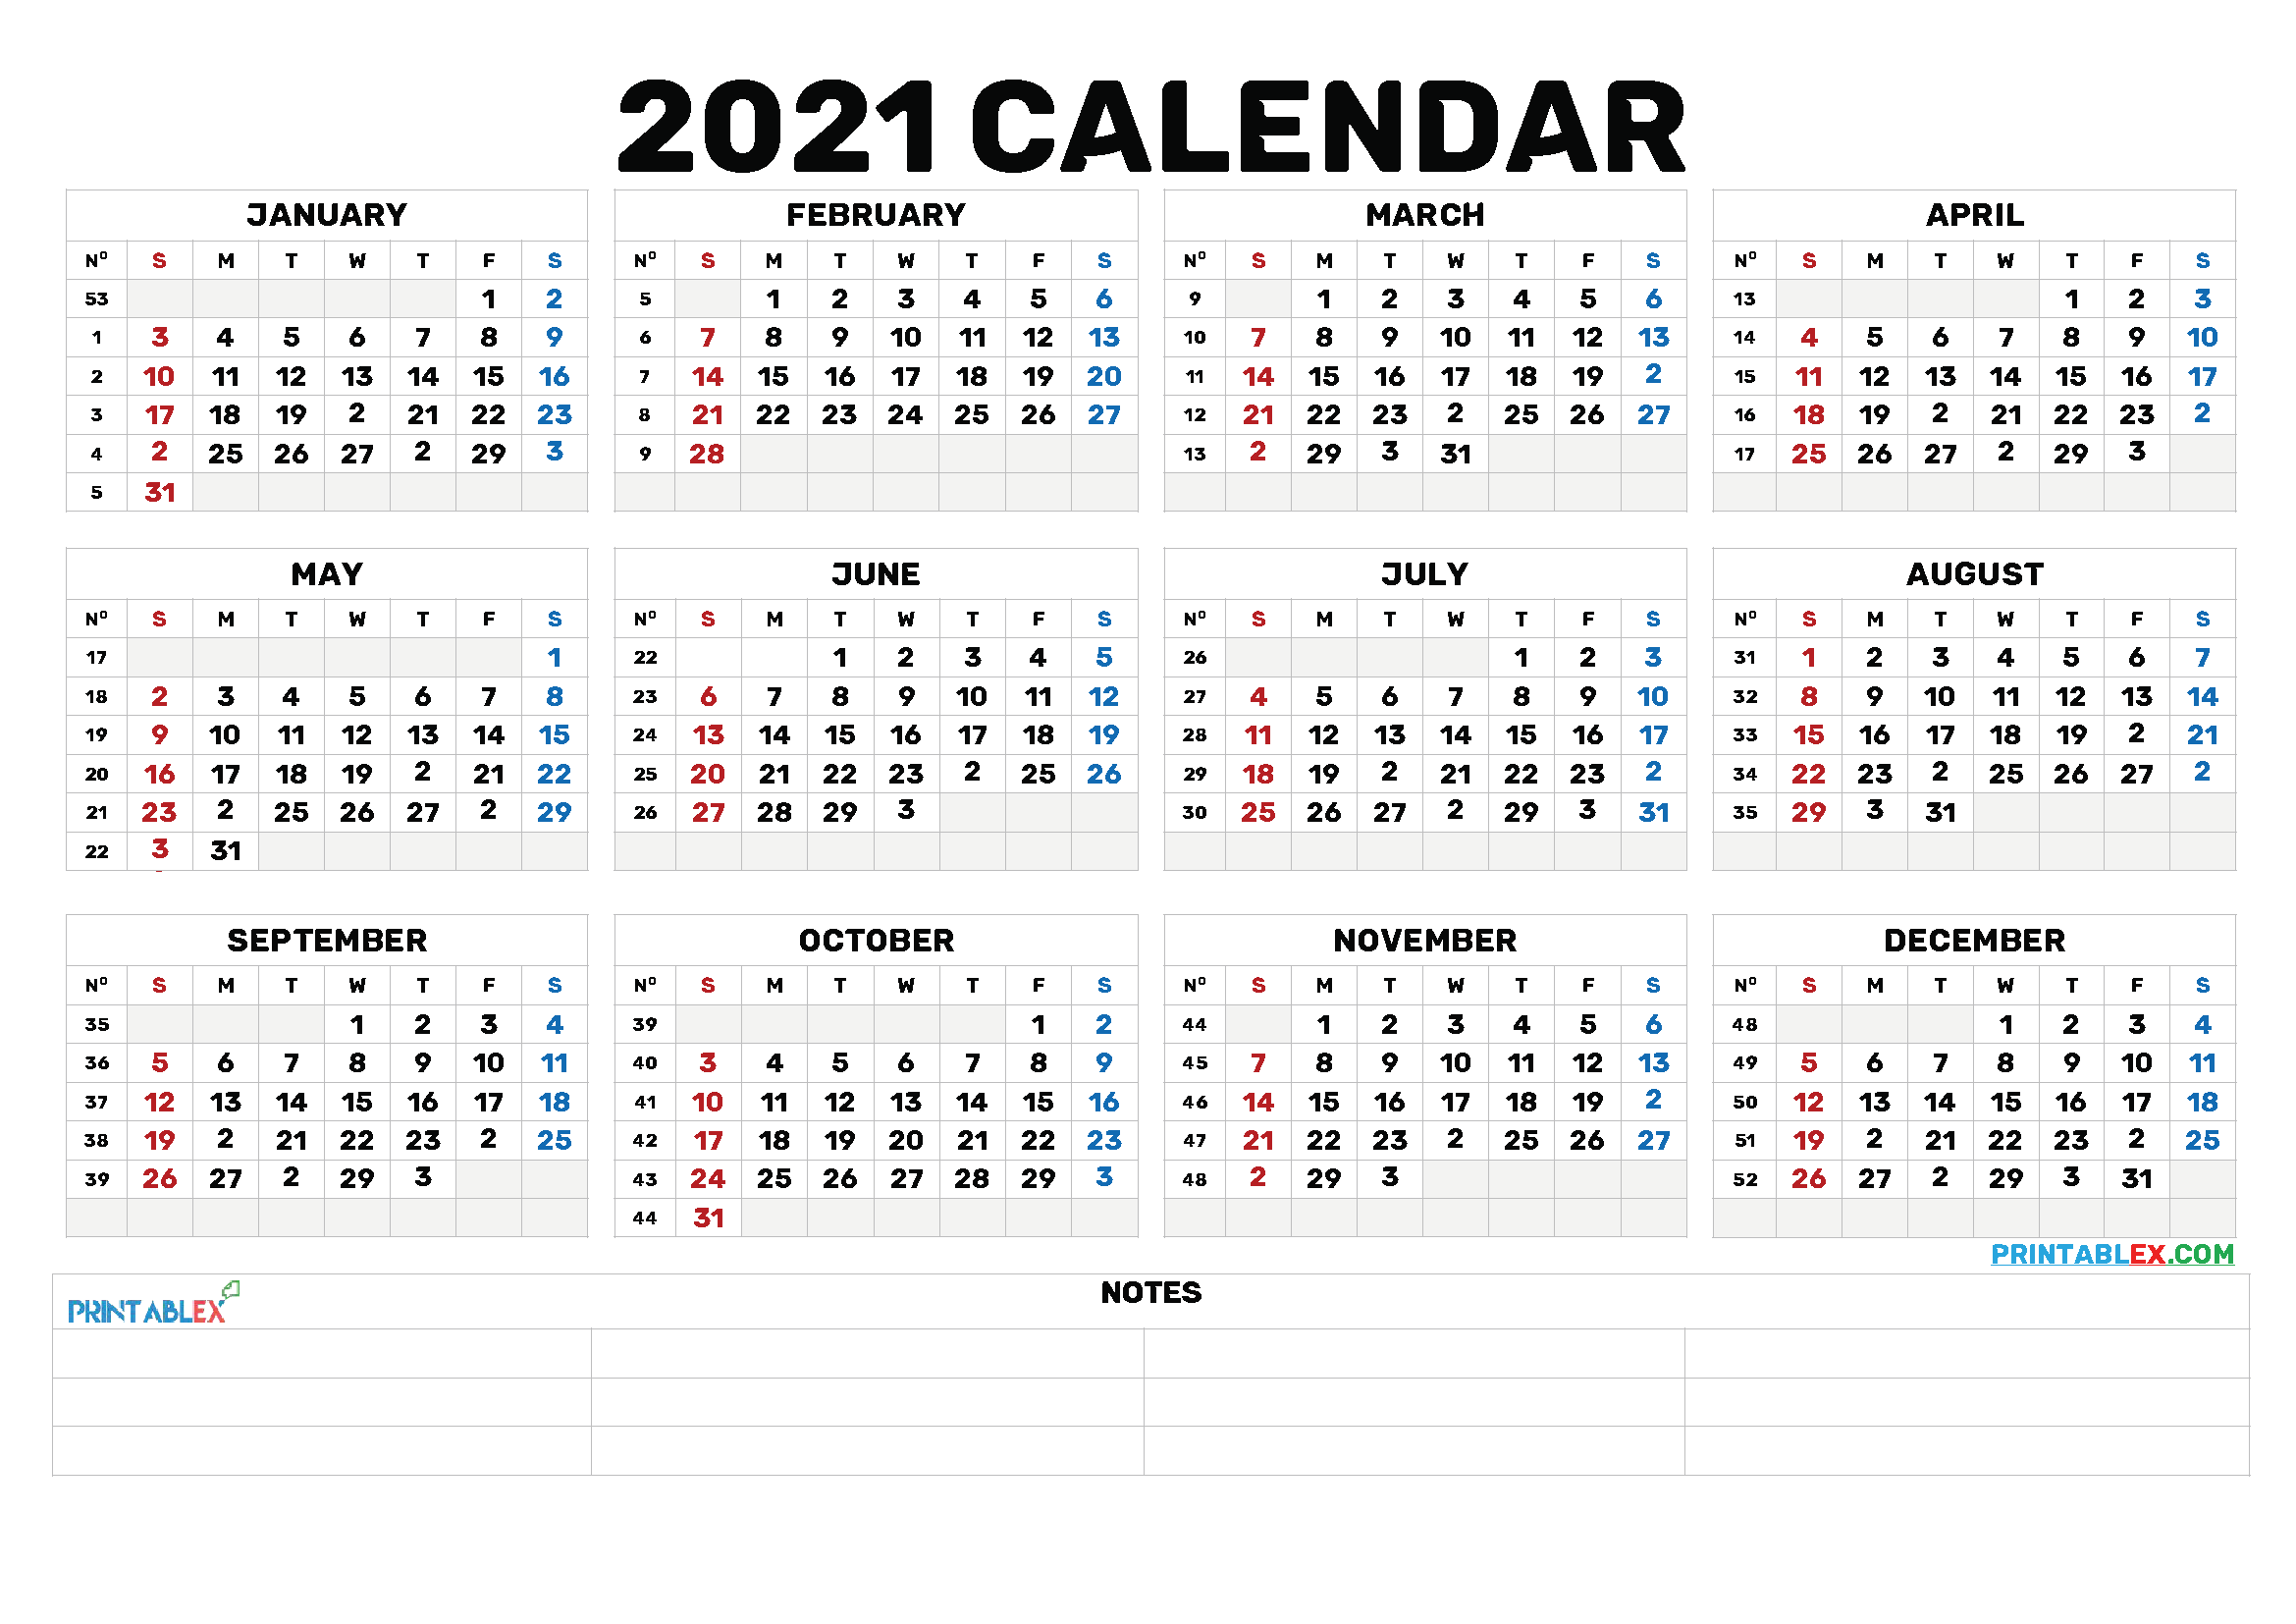 Calculadora Isr Annual 2021 Calendar - IMAGESEE